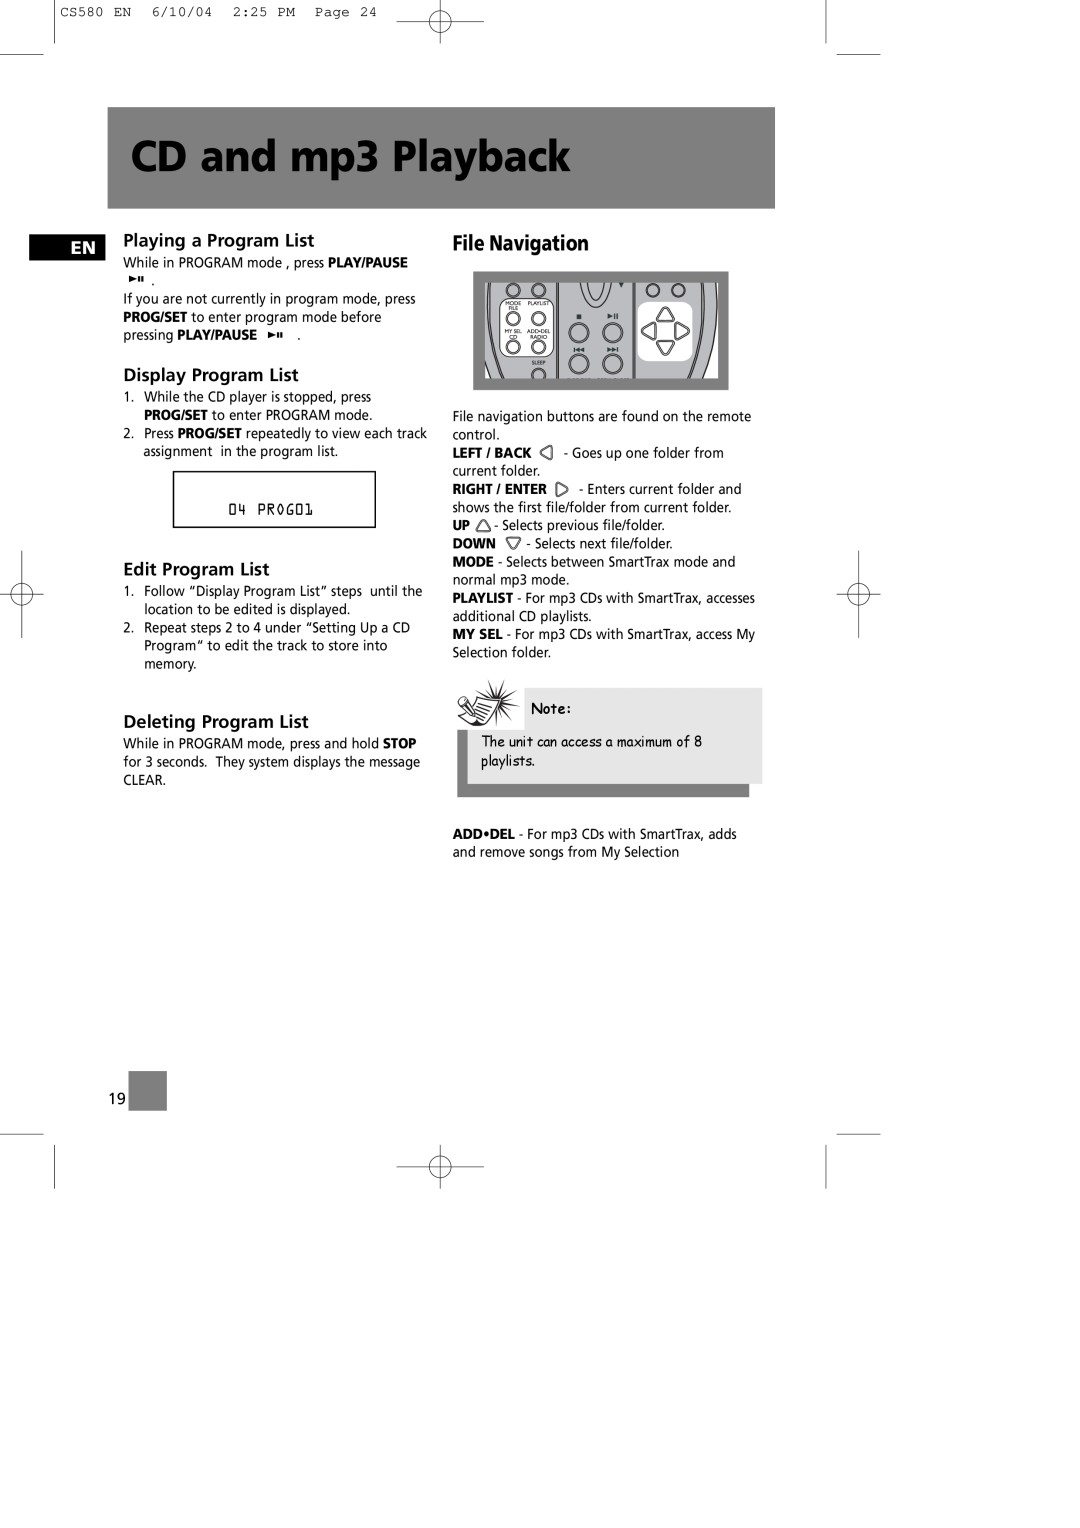 Technicolor - Thomson CS580 manual File Navigation, Playing a Program List, Display Program List, Edit Program List 